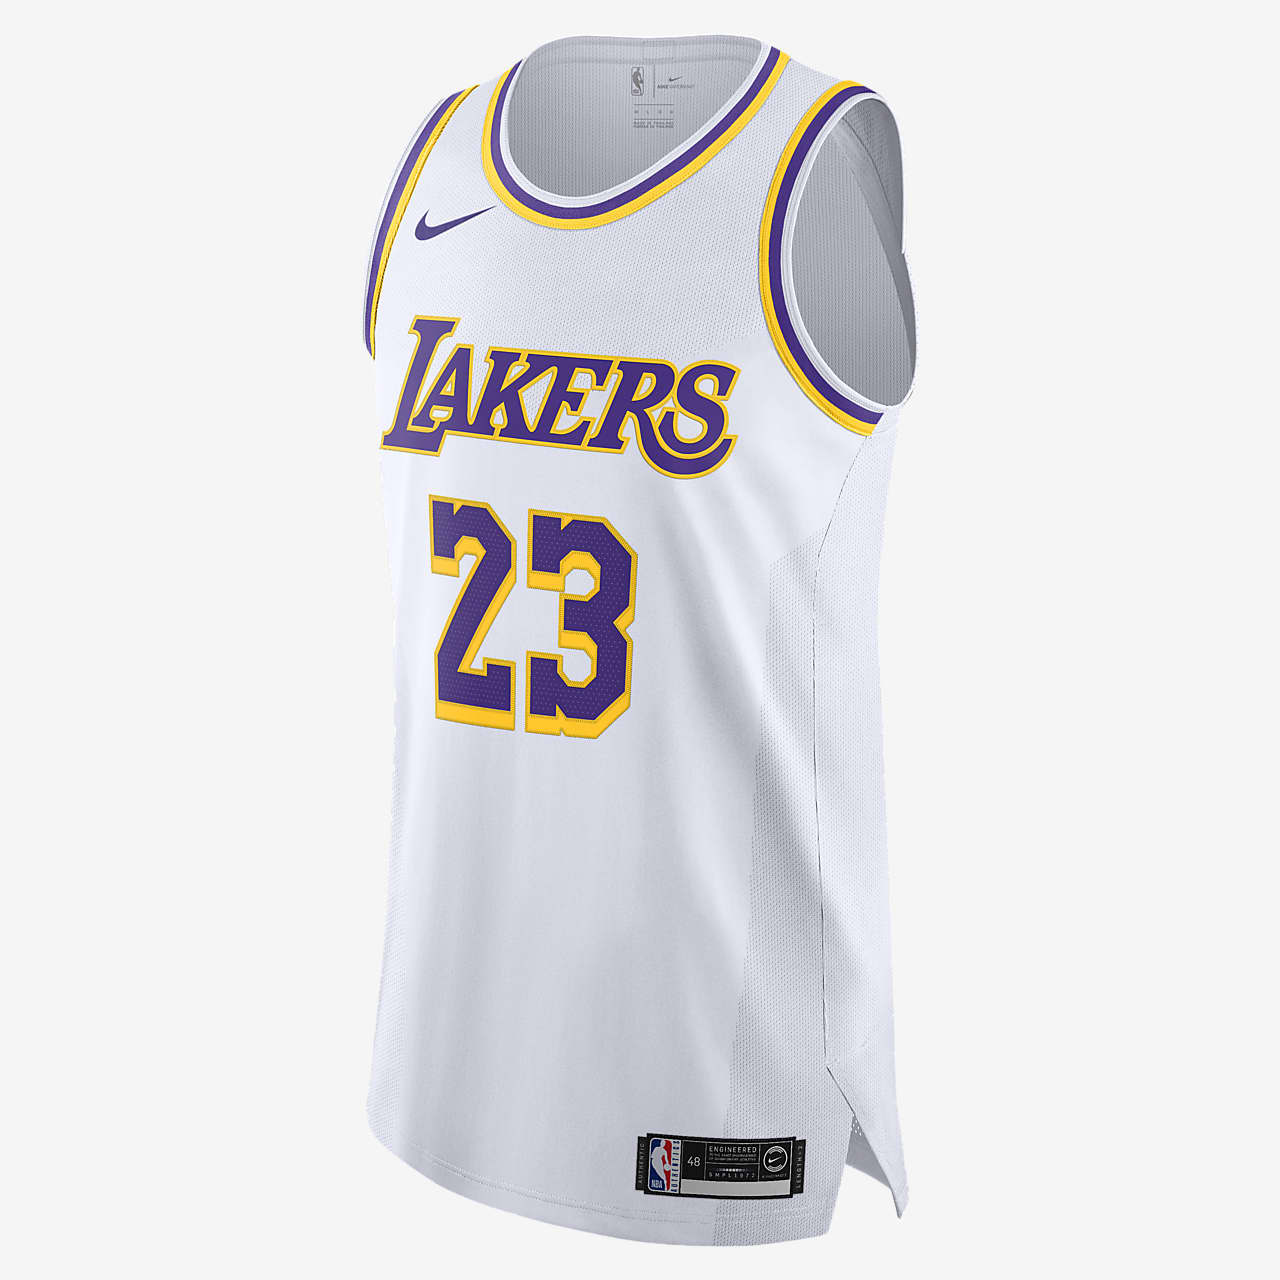 洛杉矶湖人队 (LeBron James) Association Edition Nike NBA Jersey 男子球衣